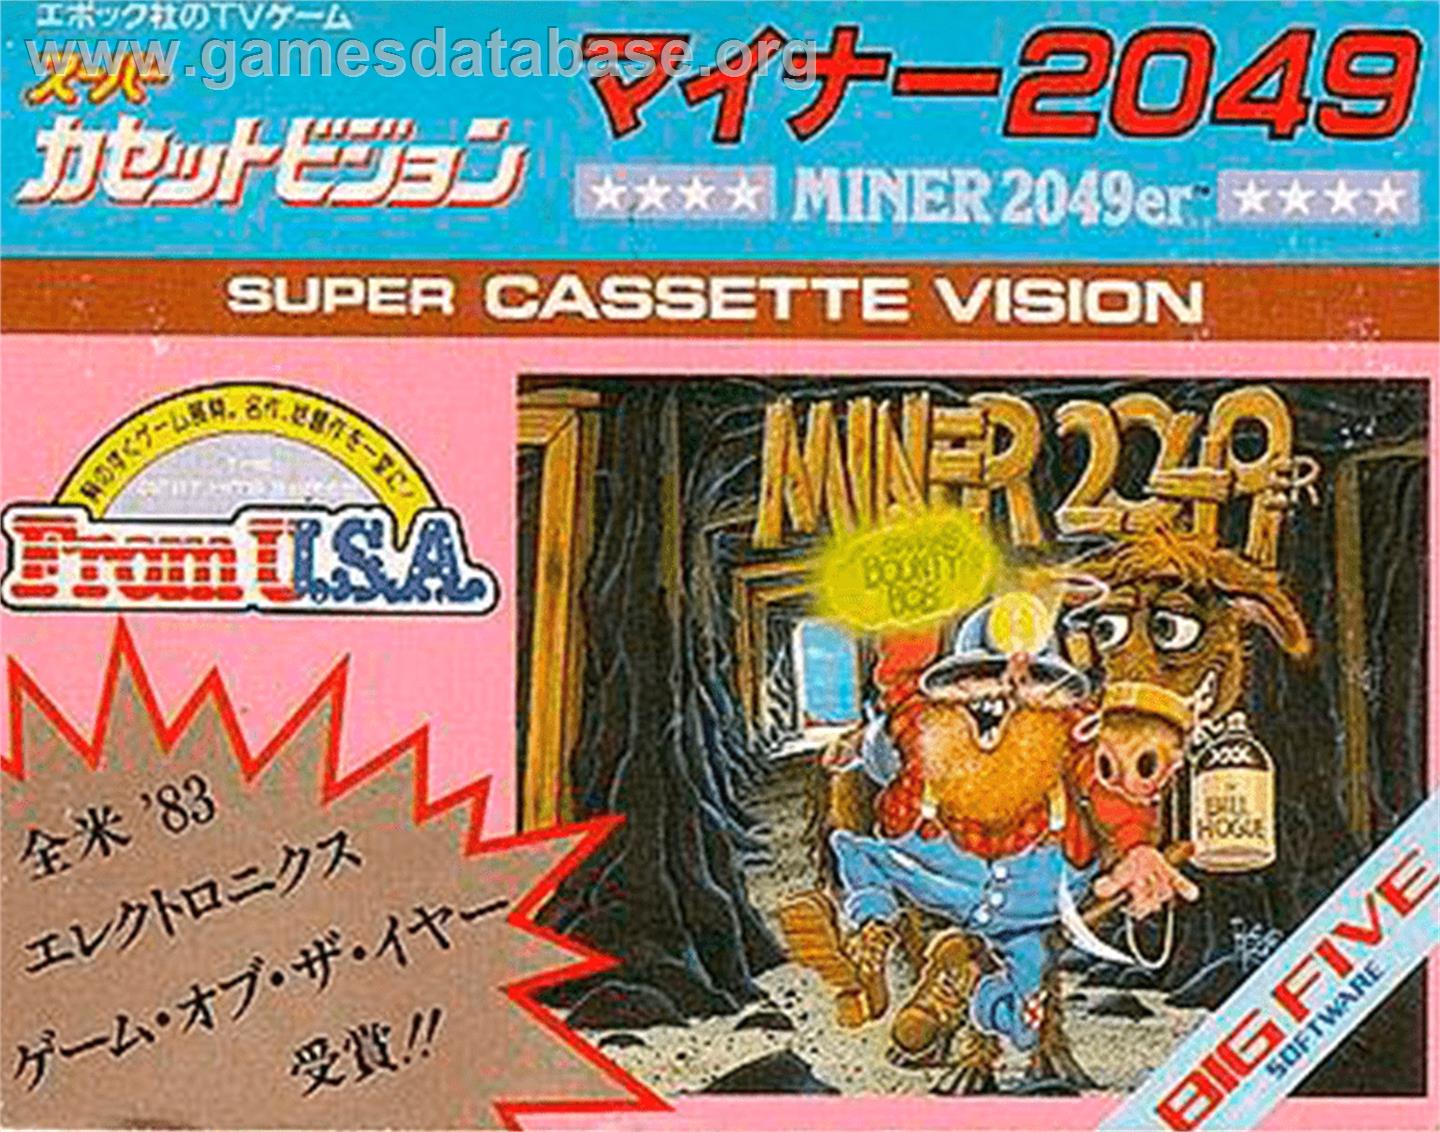 Miner 2049er - Epoch Super Cassette Vision - Artwork - Box